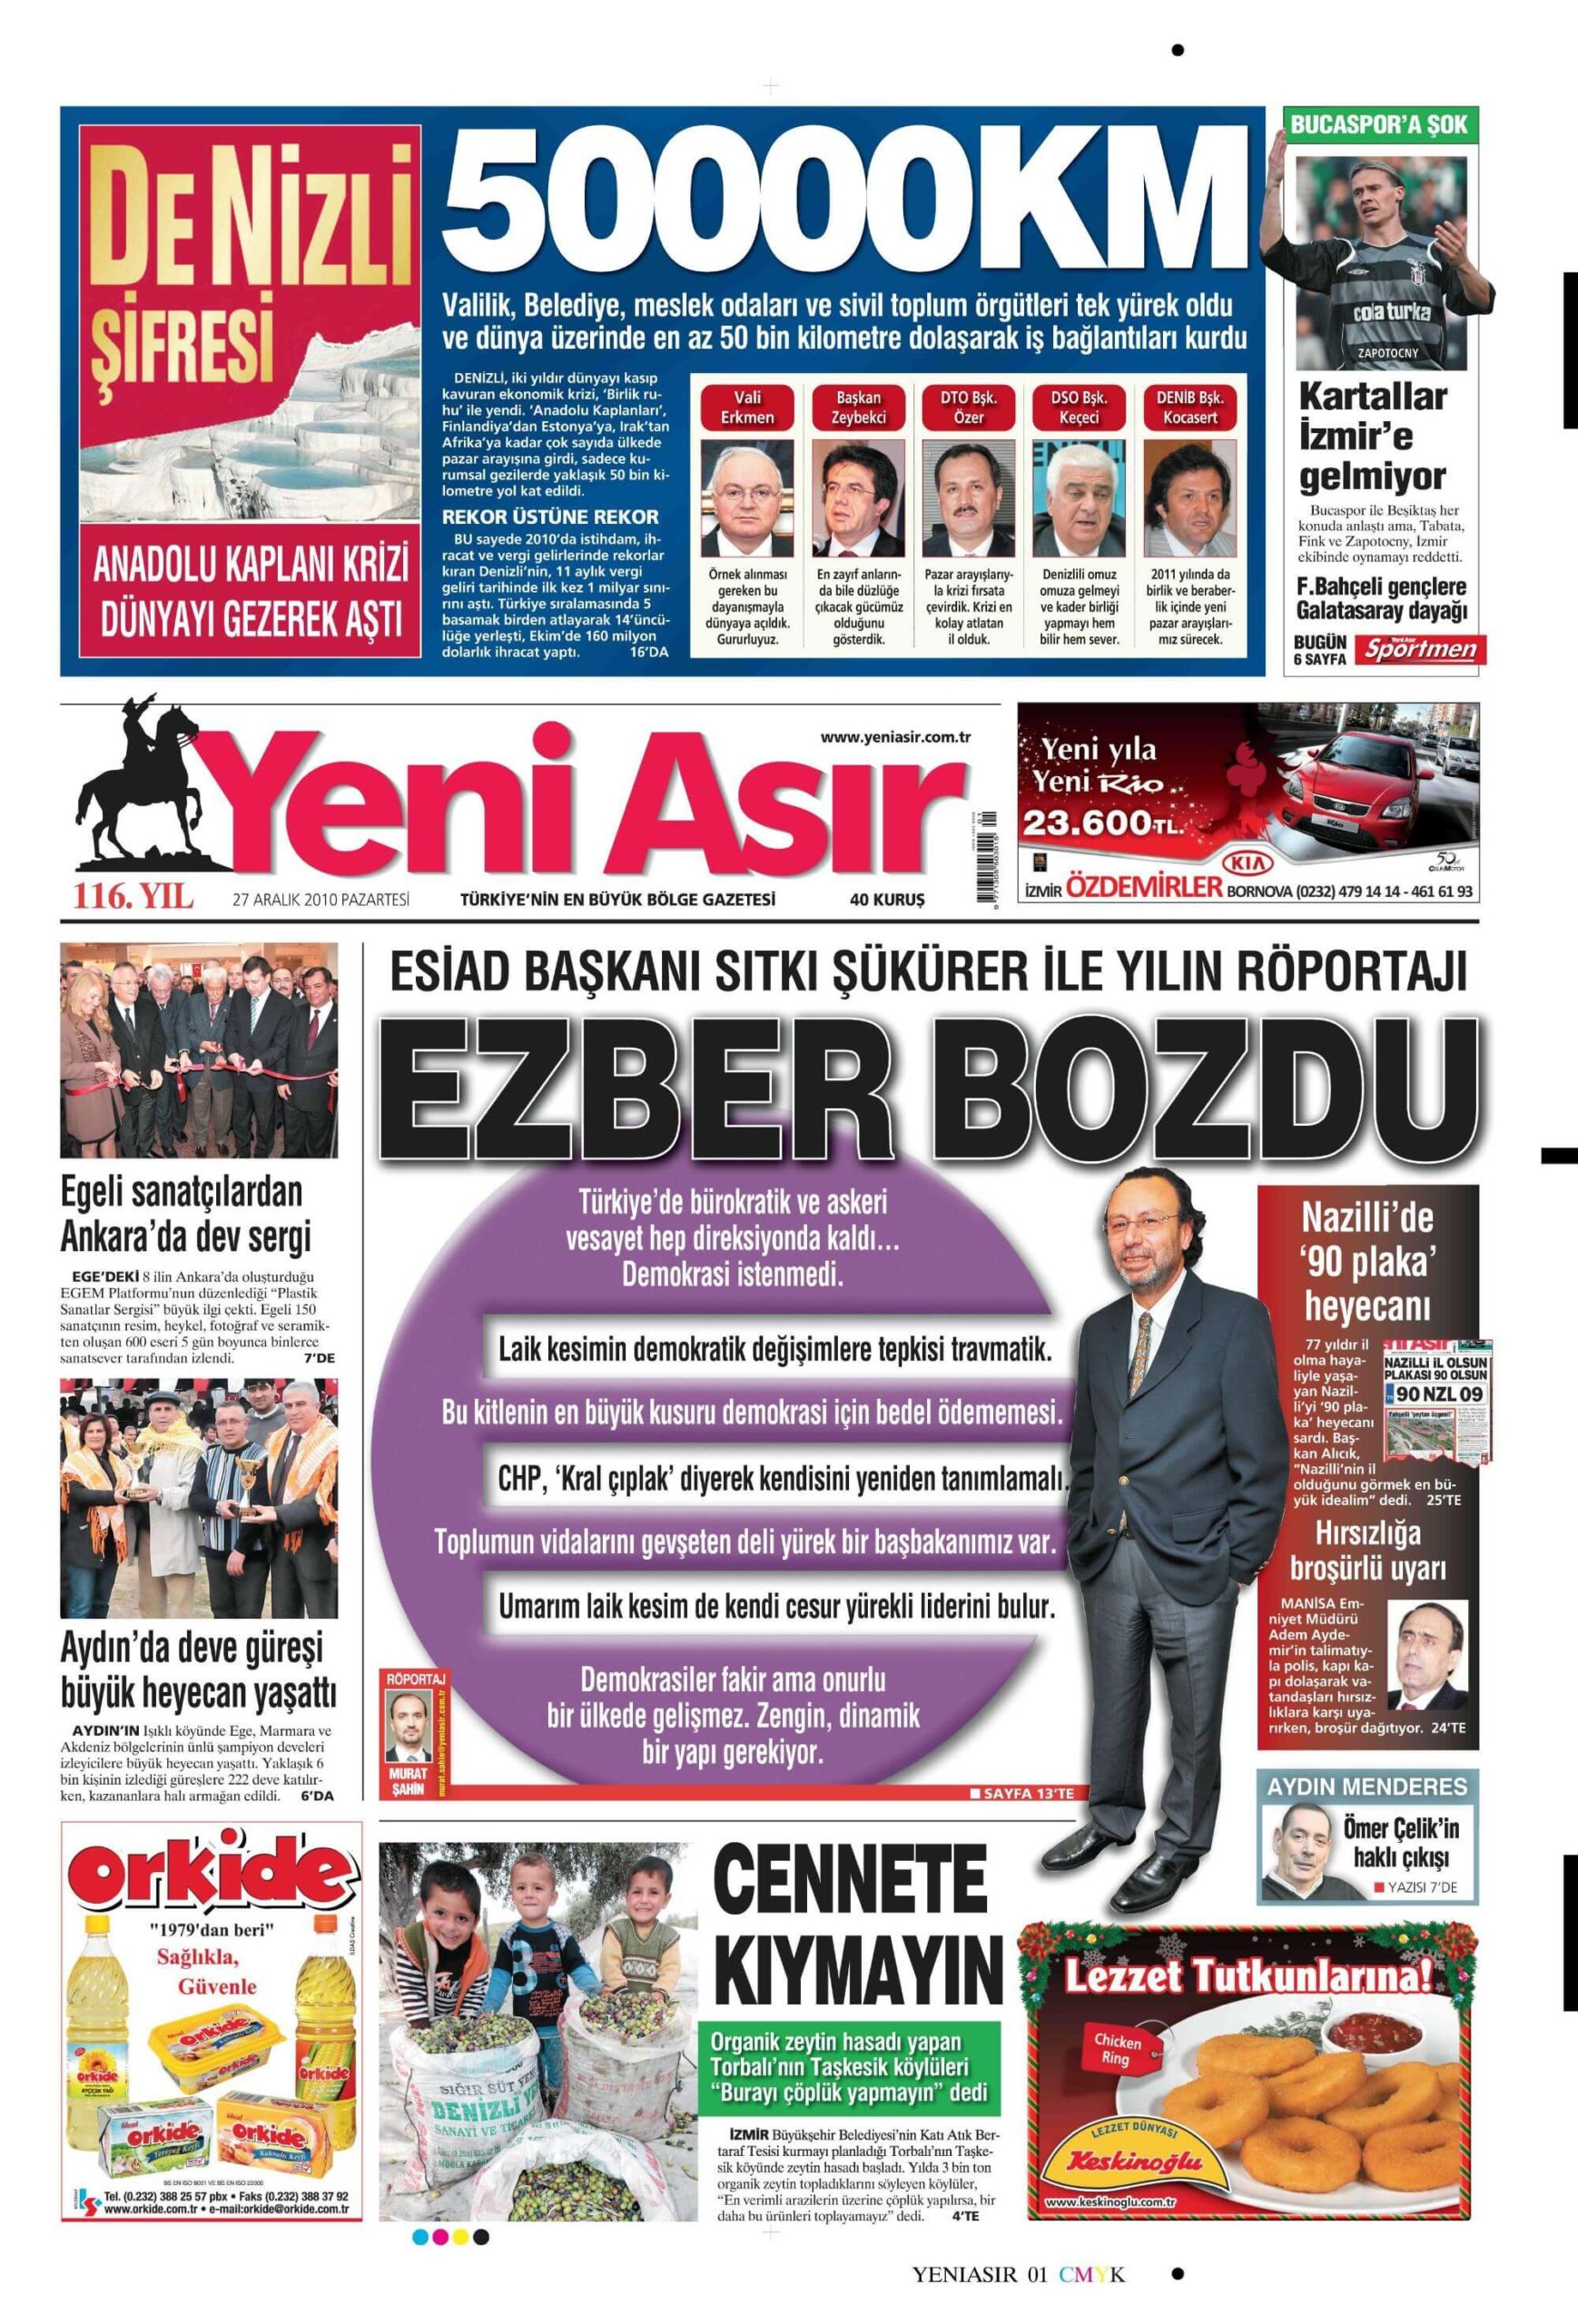 Turkish Newspapers 36 Yeni Asir scaled